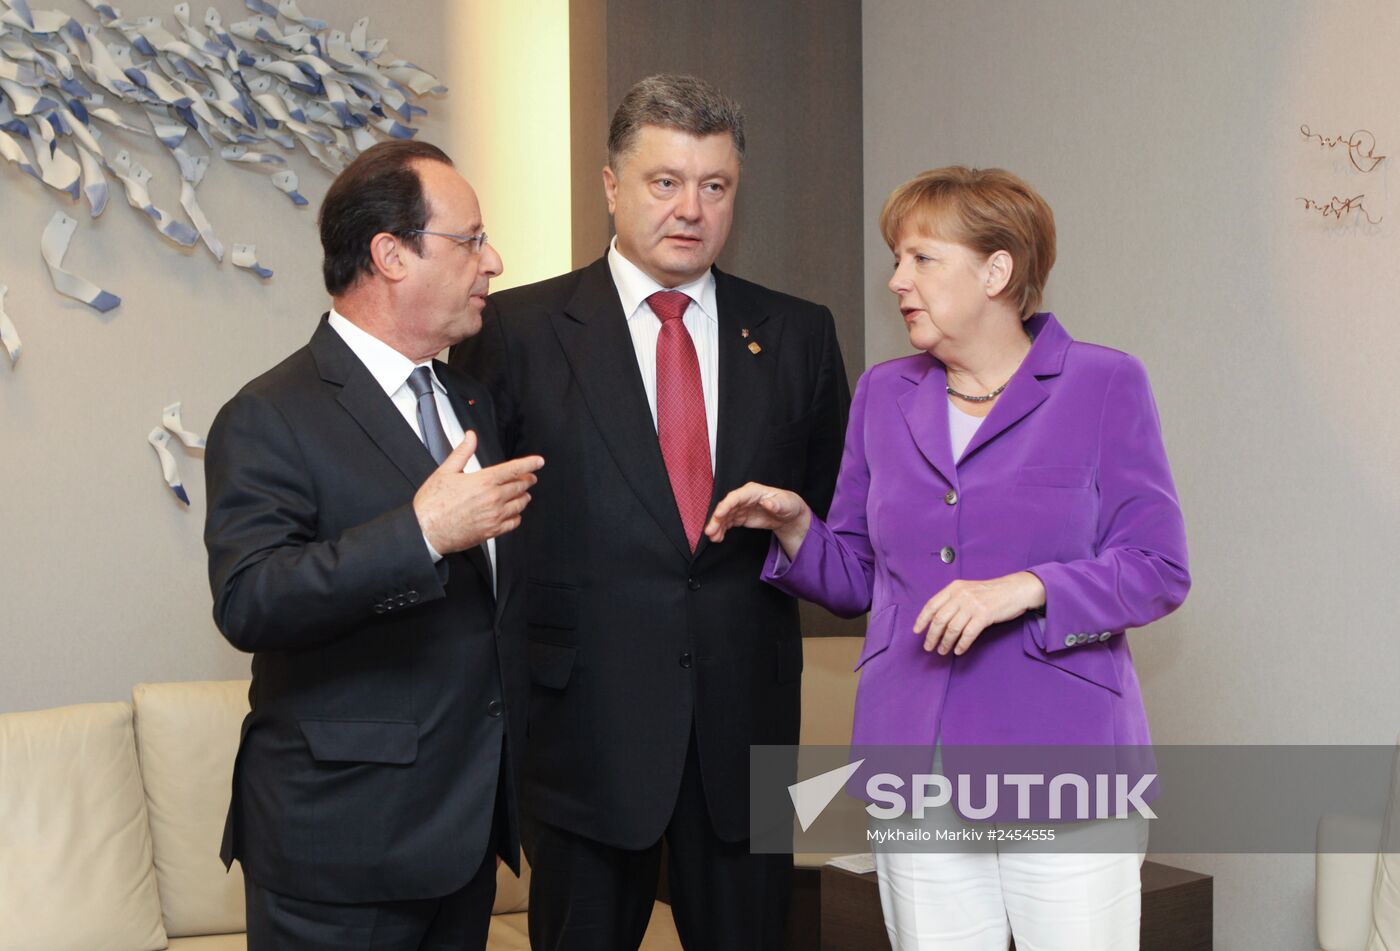 Pyotr Poroshenko's working visit to Brussels